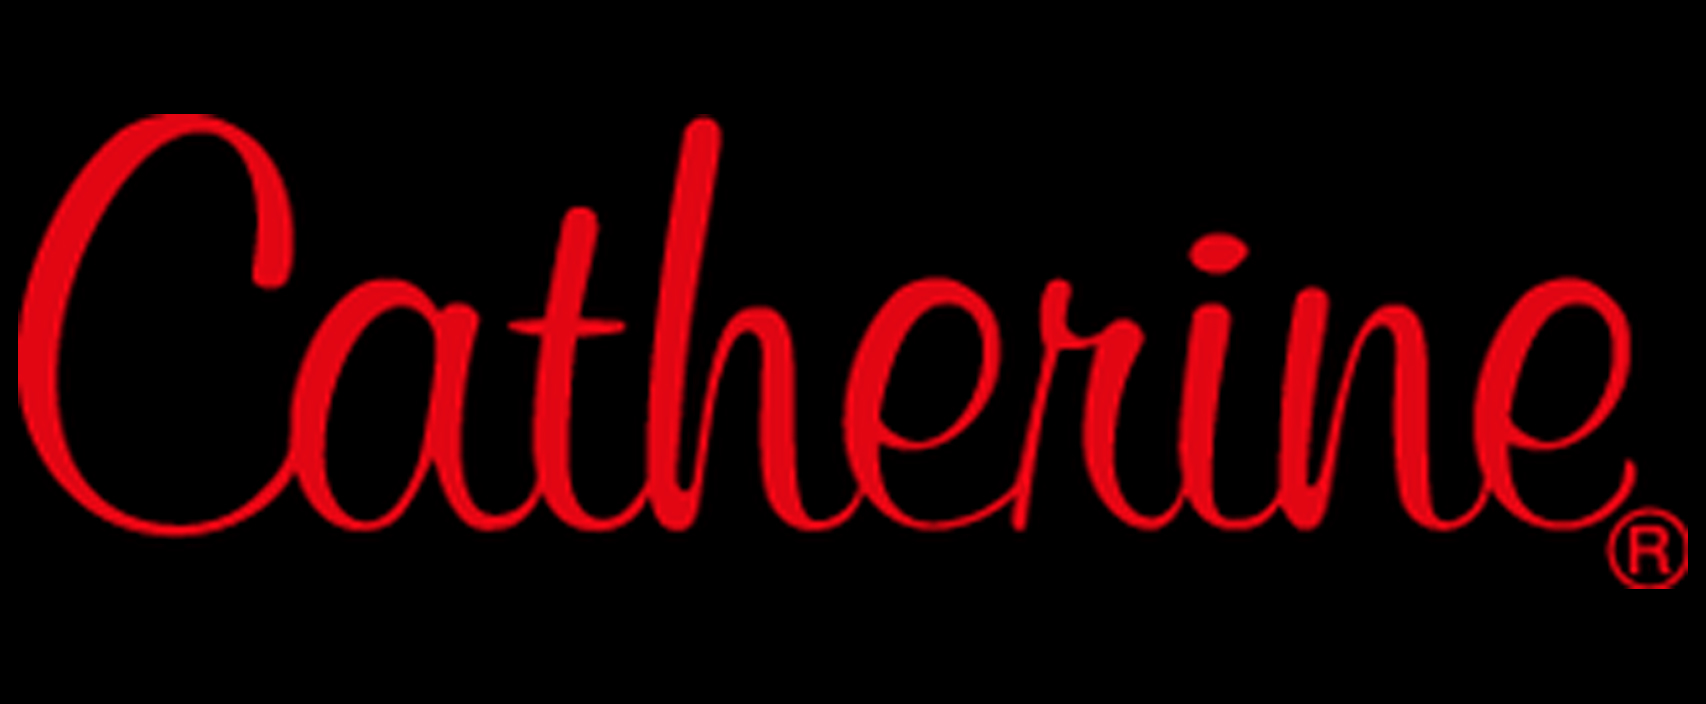 catherine_logo.jpg